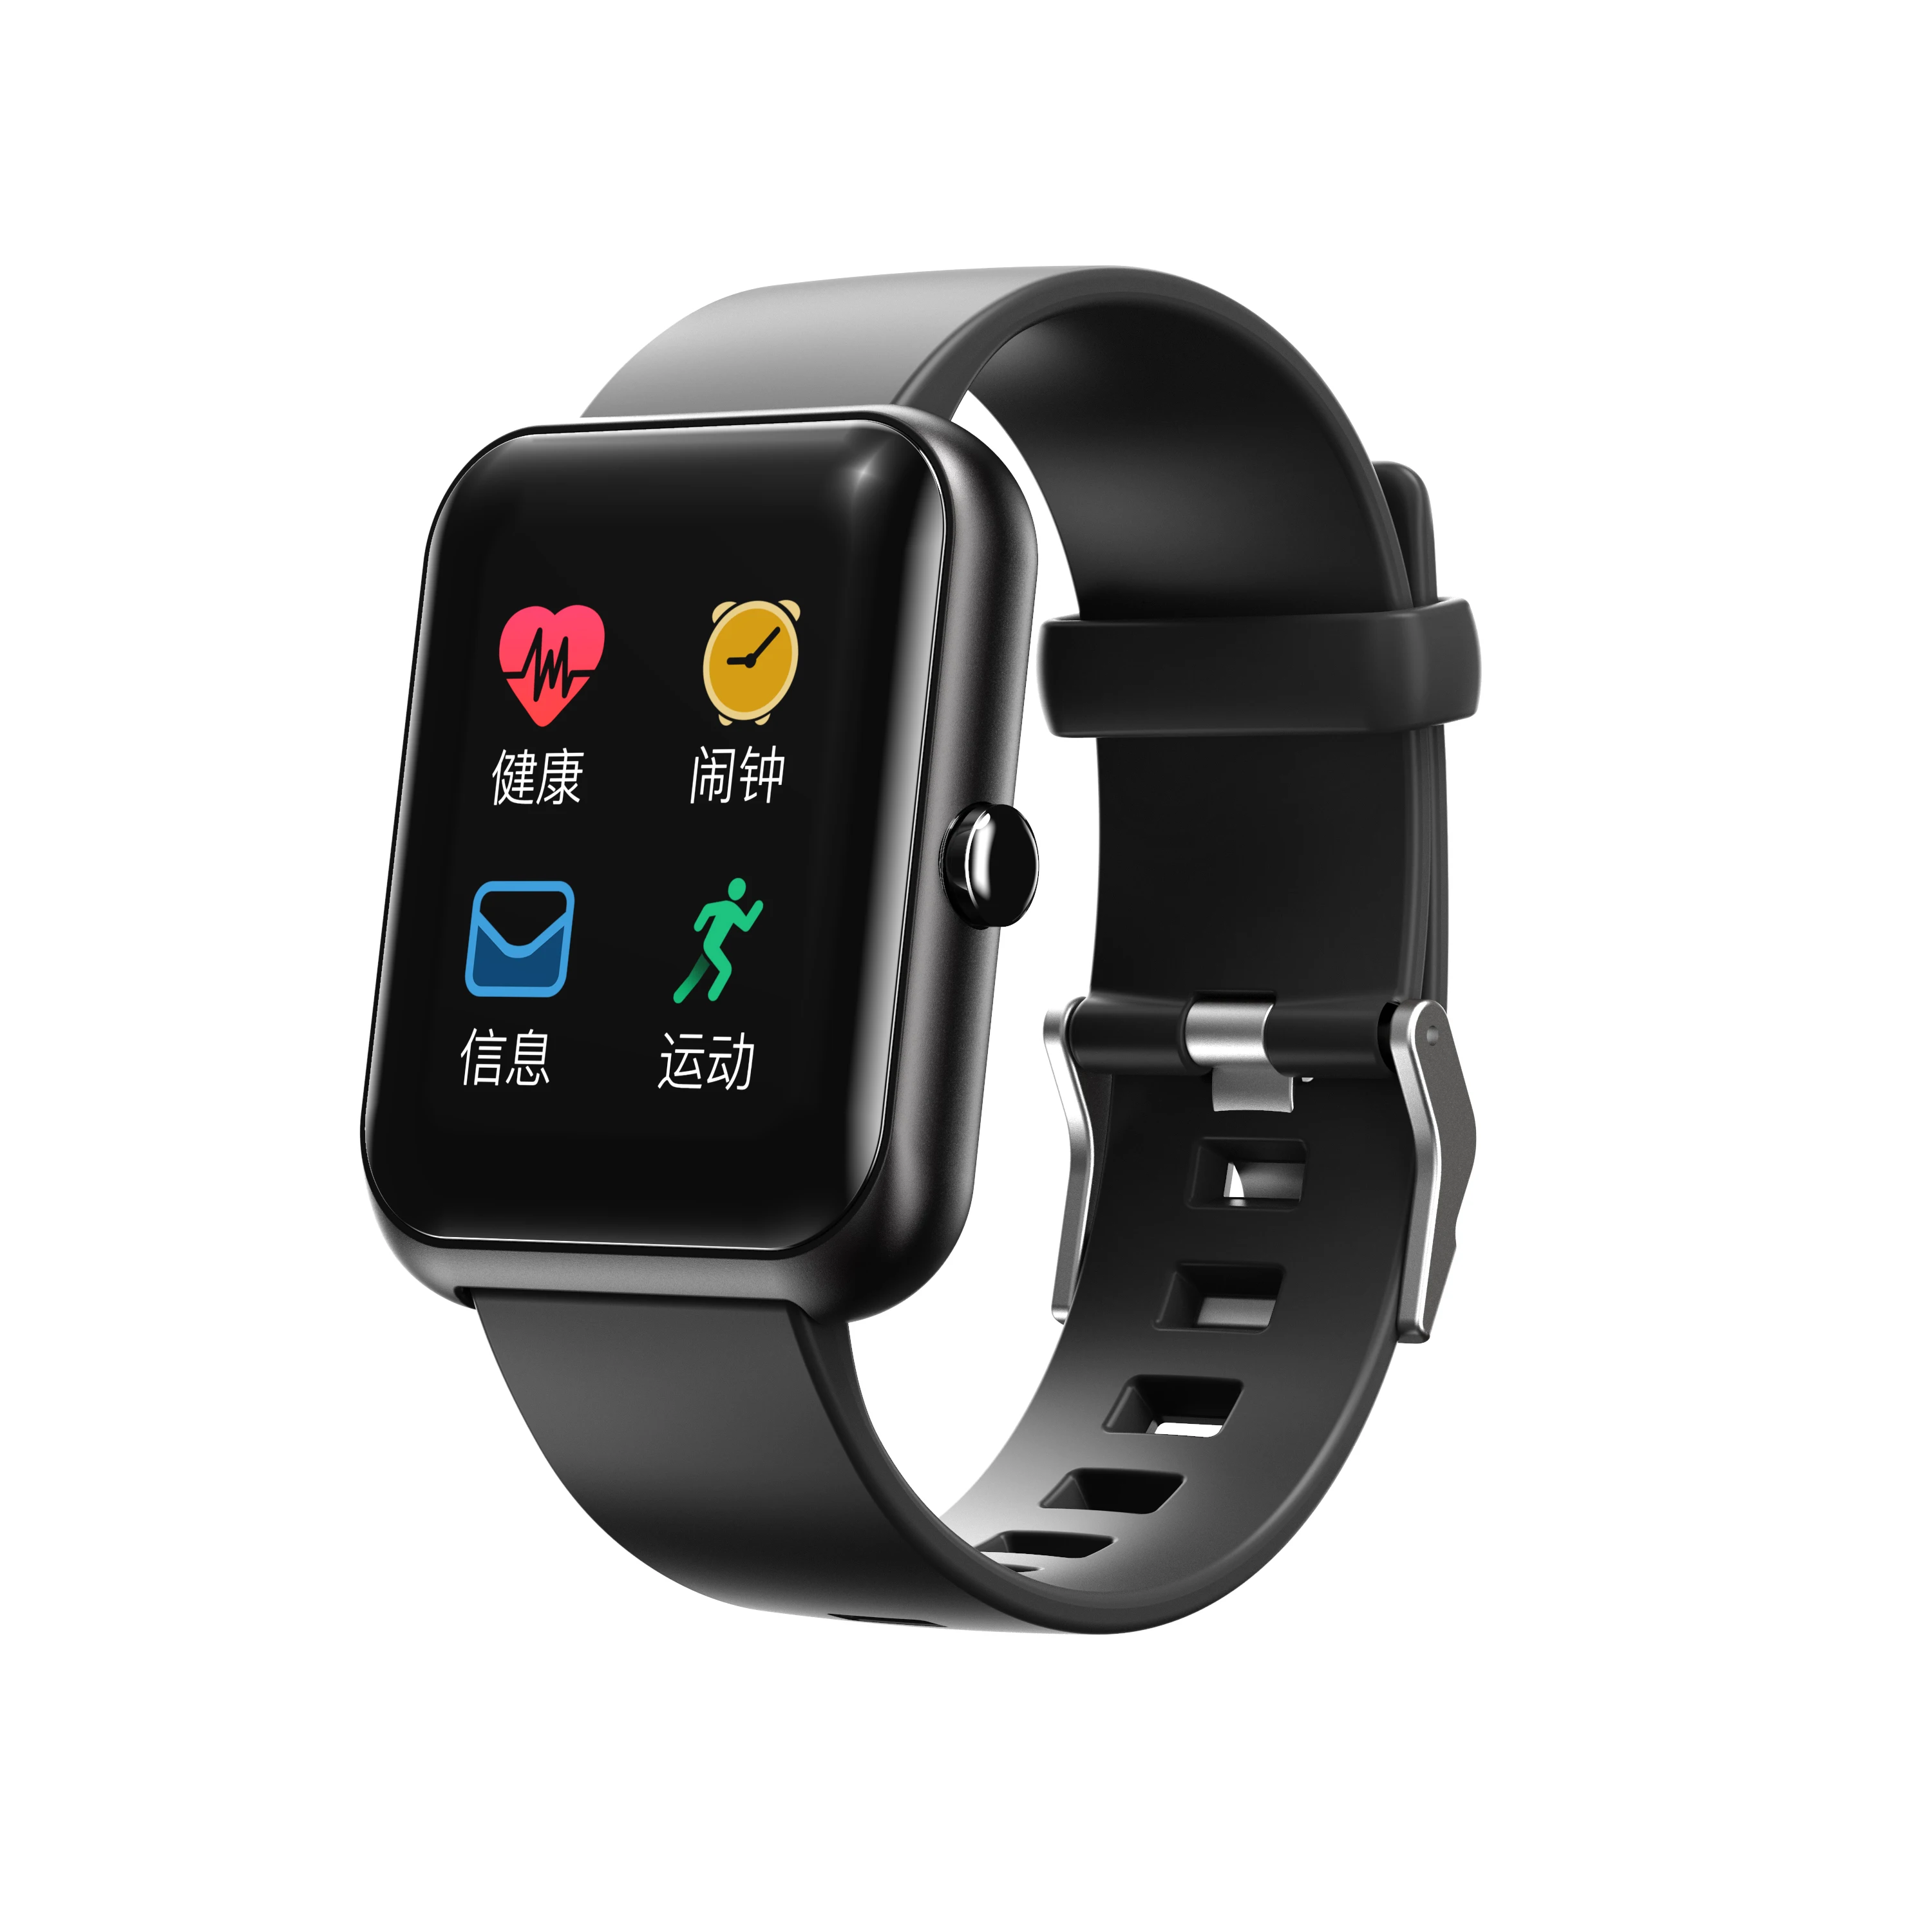 

relogio inteligente ios smart watch, deportivo impermeable ip67 resistente reloj inteligente a prueba de agua, Black blue pink gold sliver